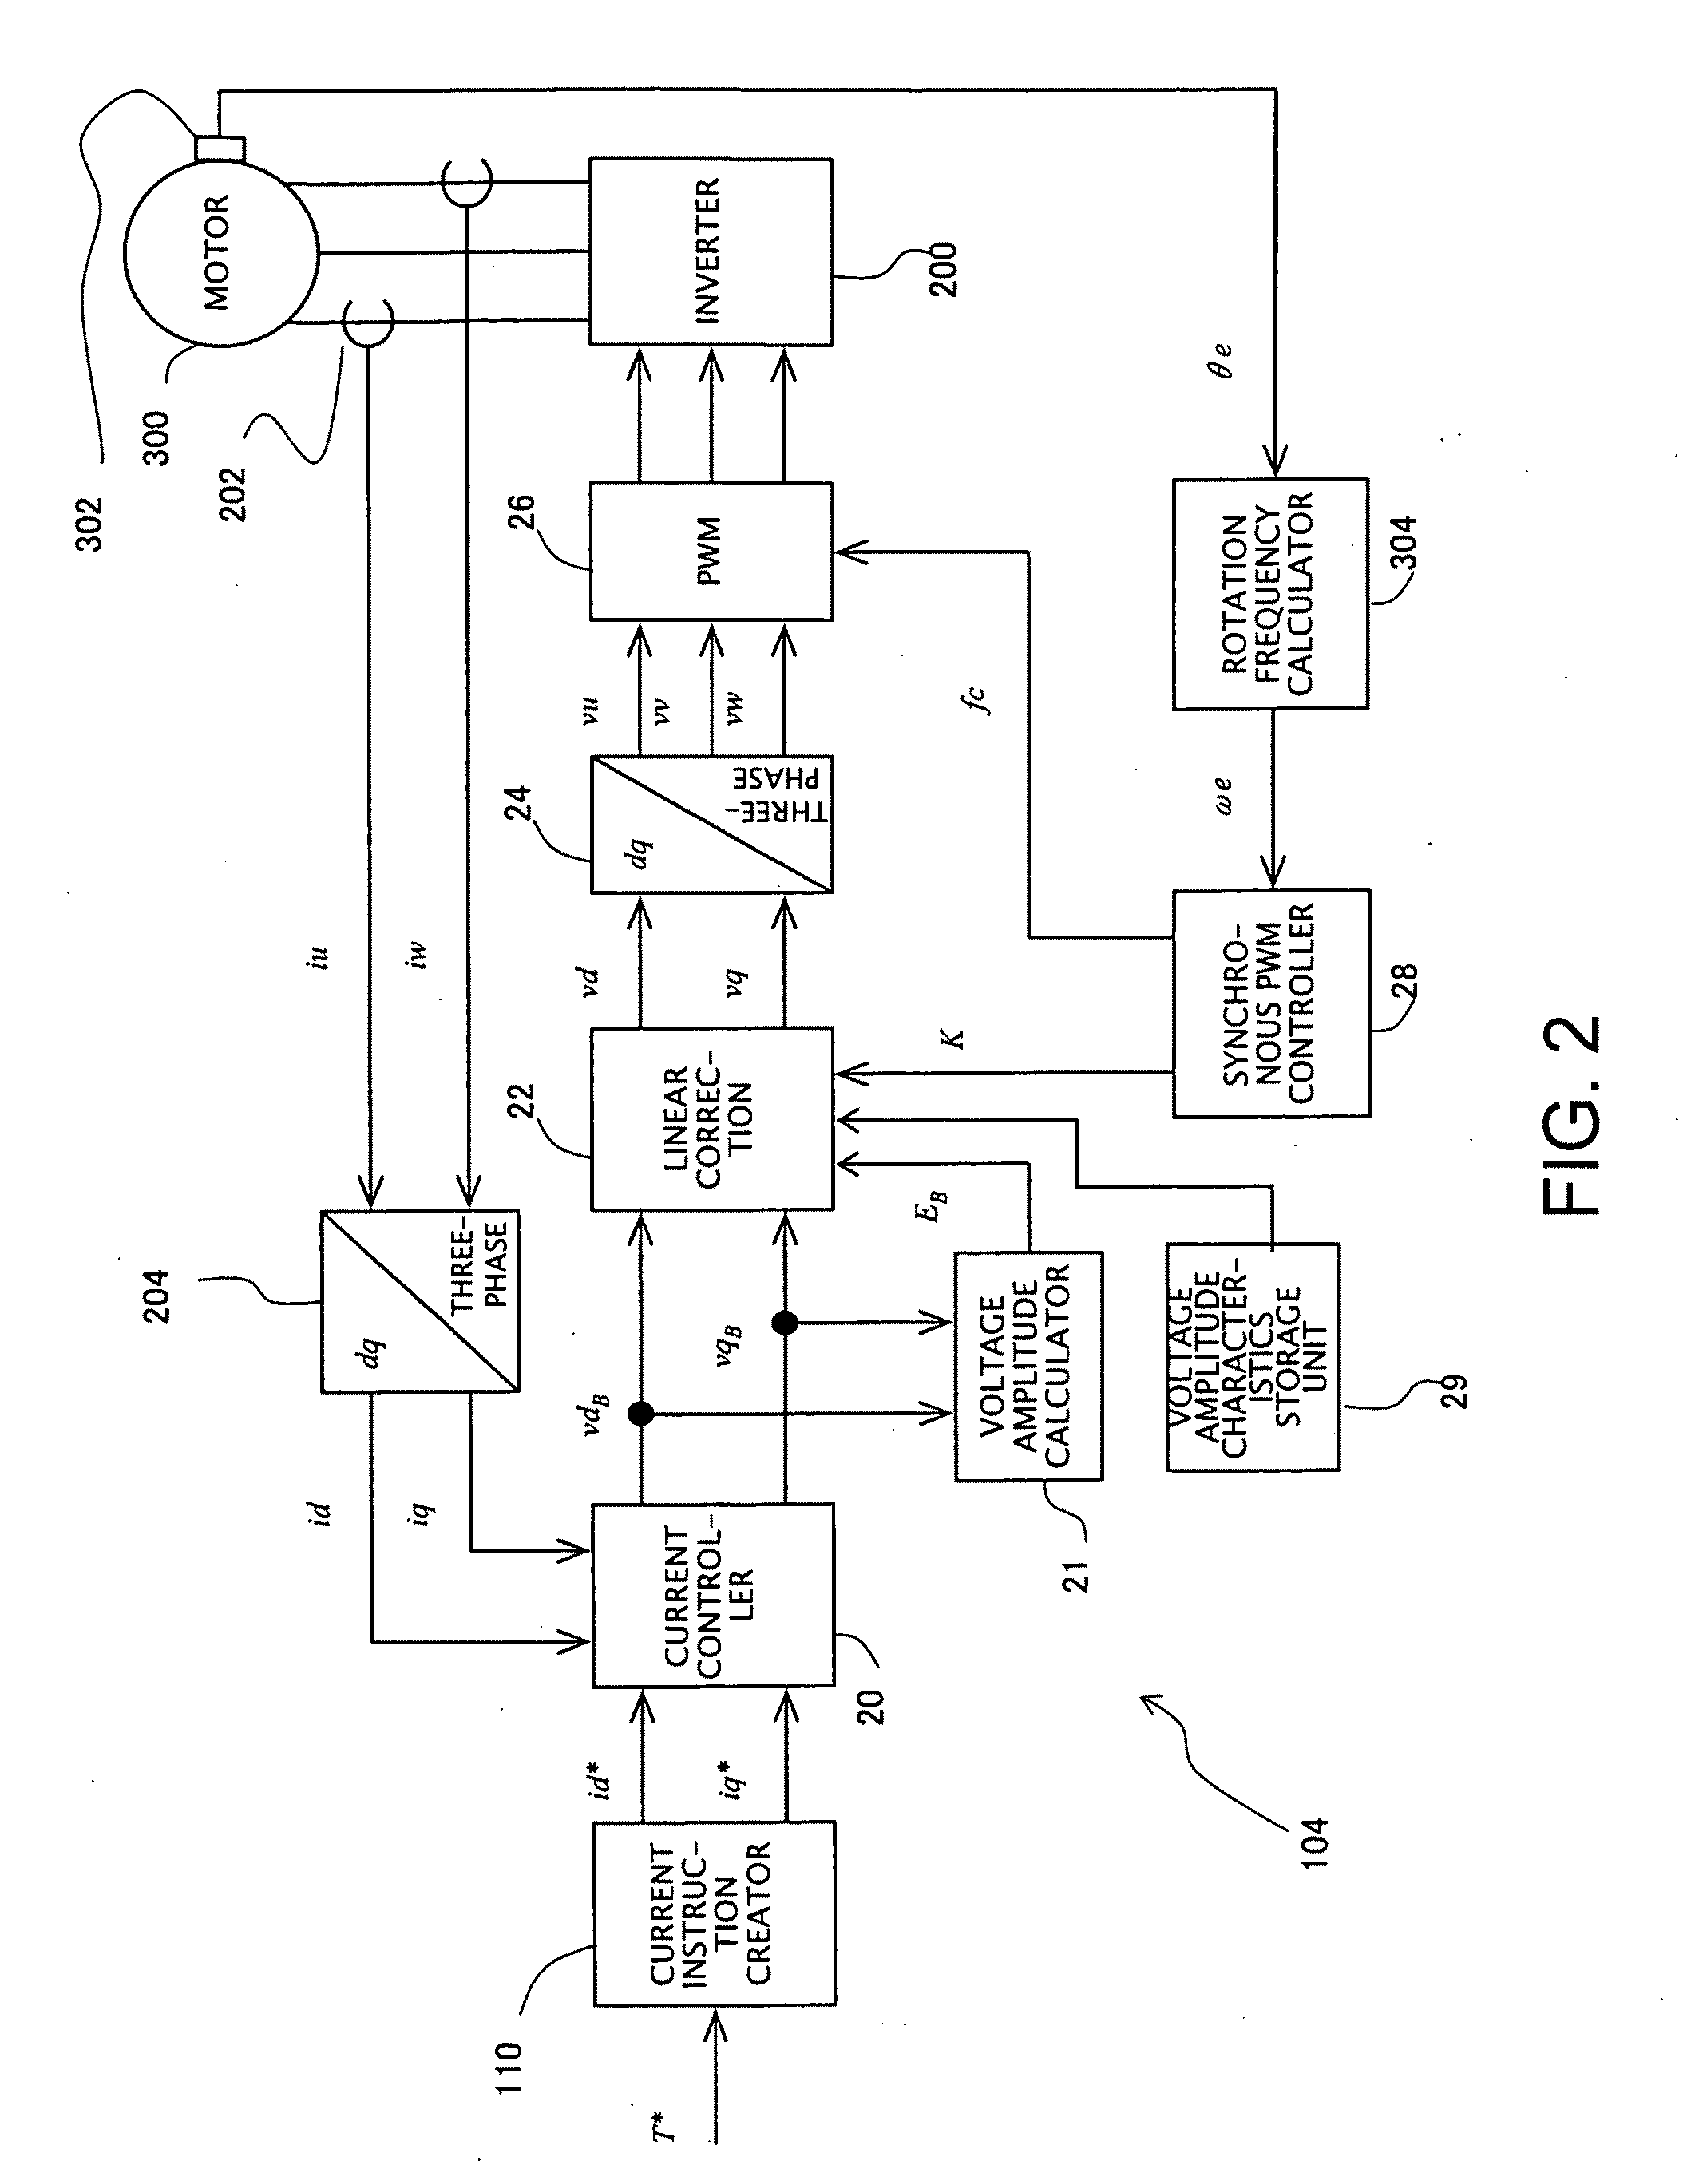 Ac motor drive controller